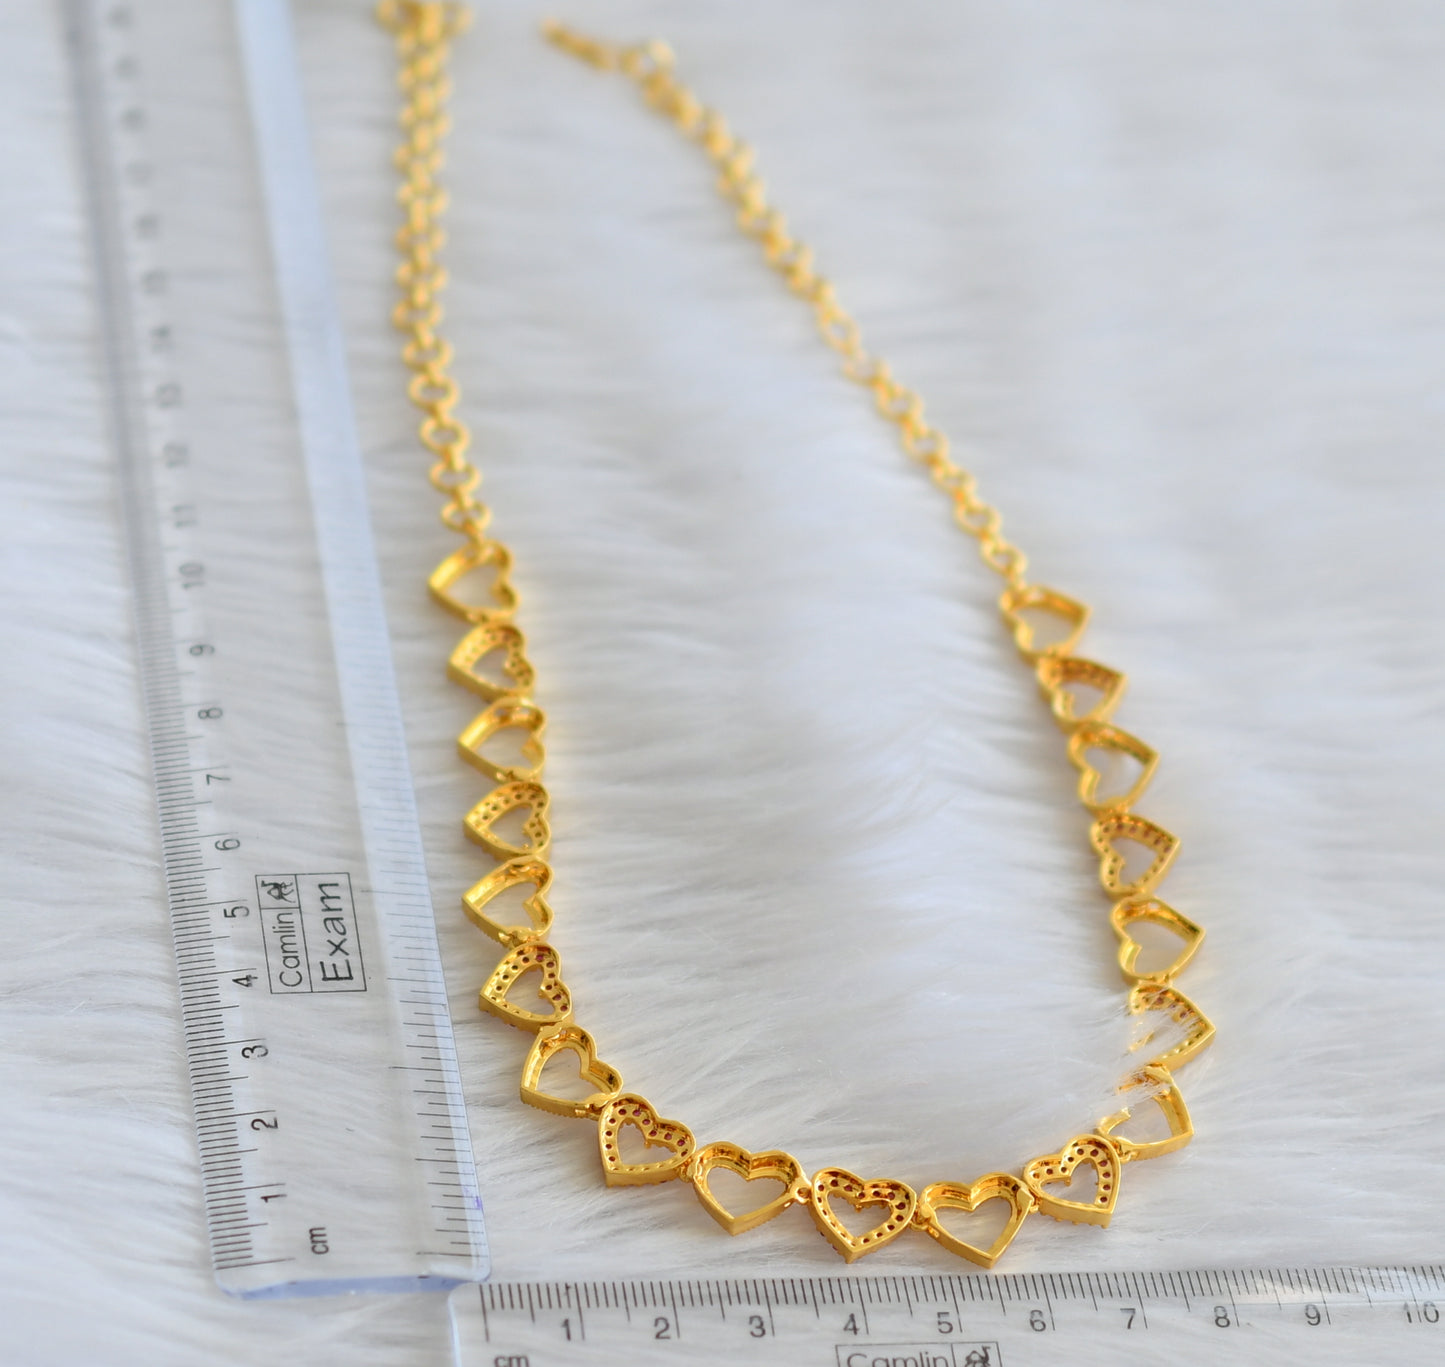 Gold tone ruby stone heart necklace dj-44145